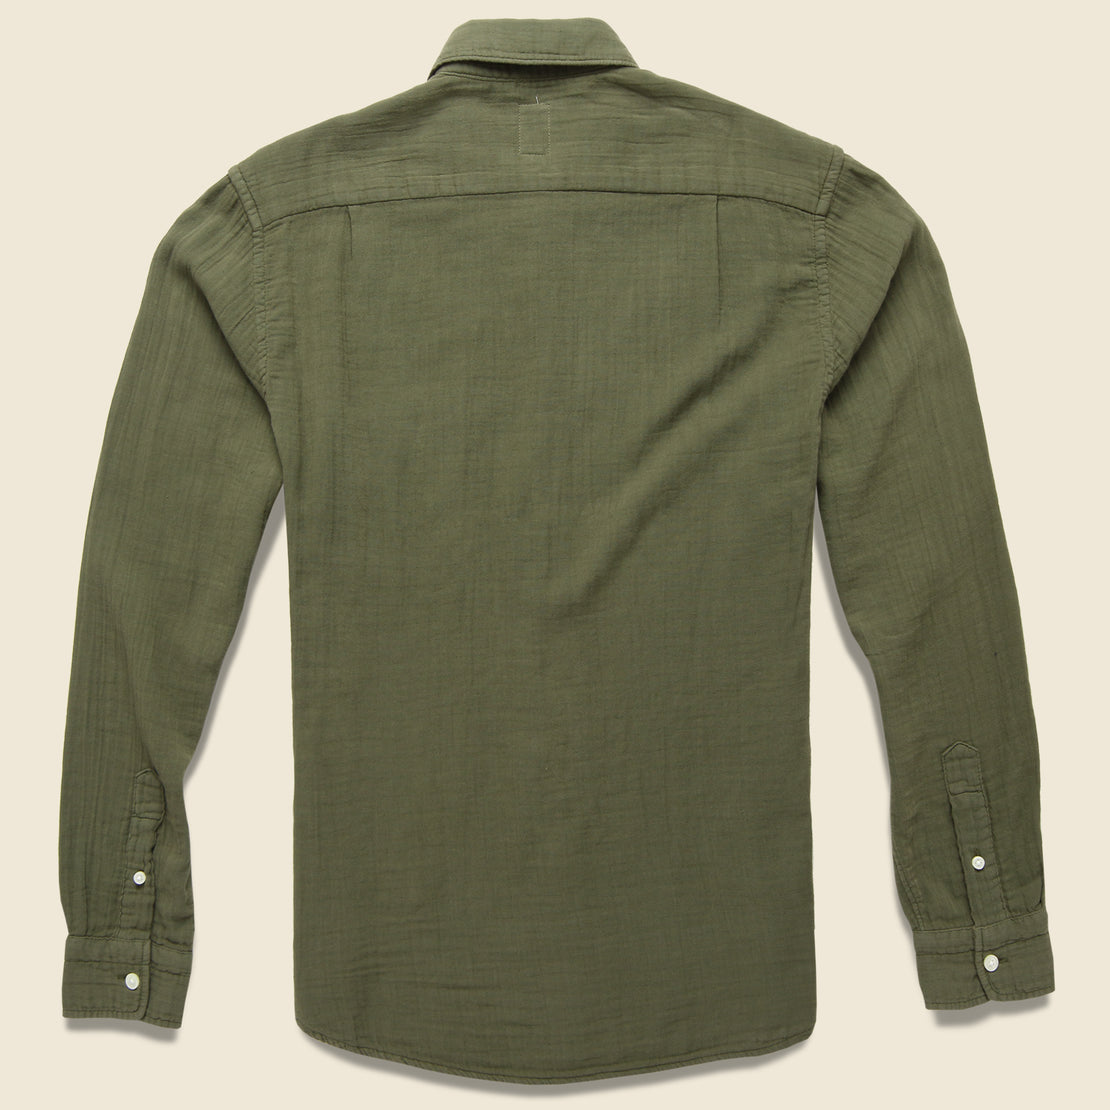 Vintage Double Gauze Shirt - Military Green